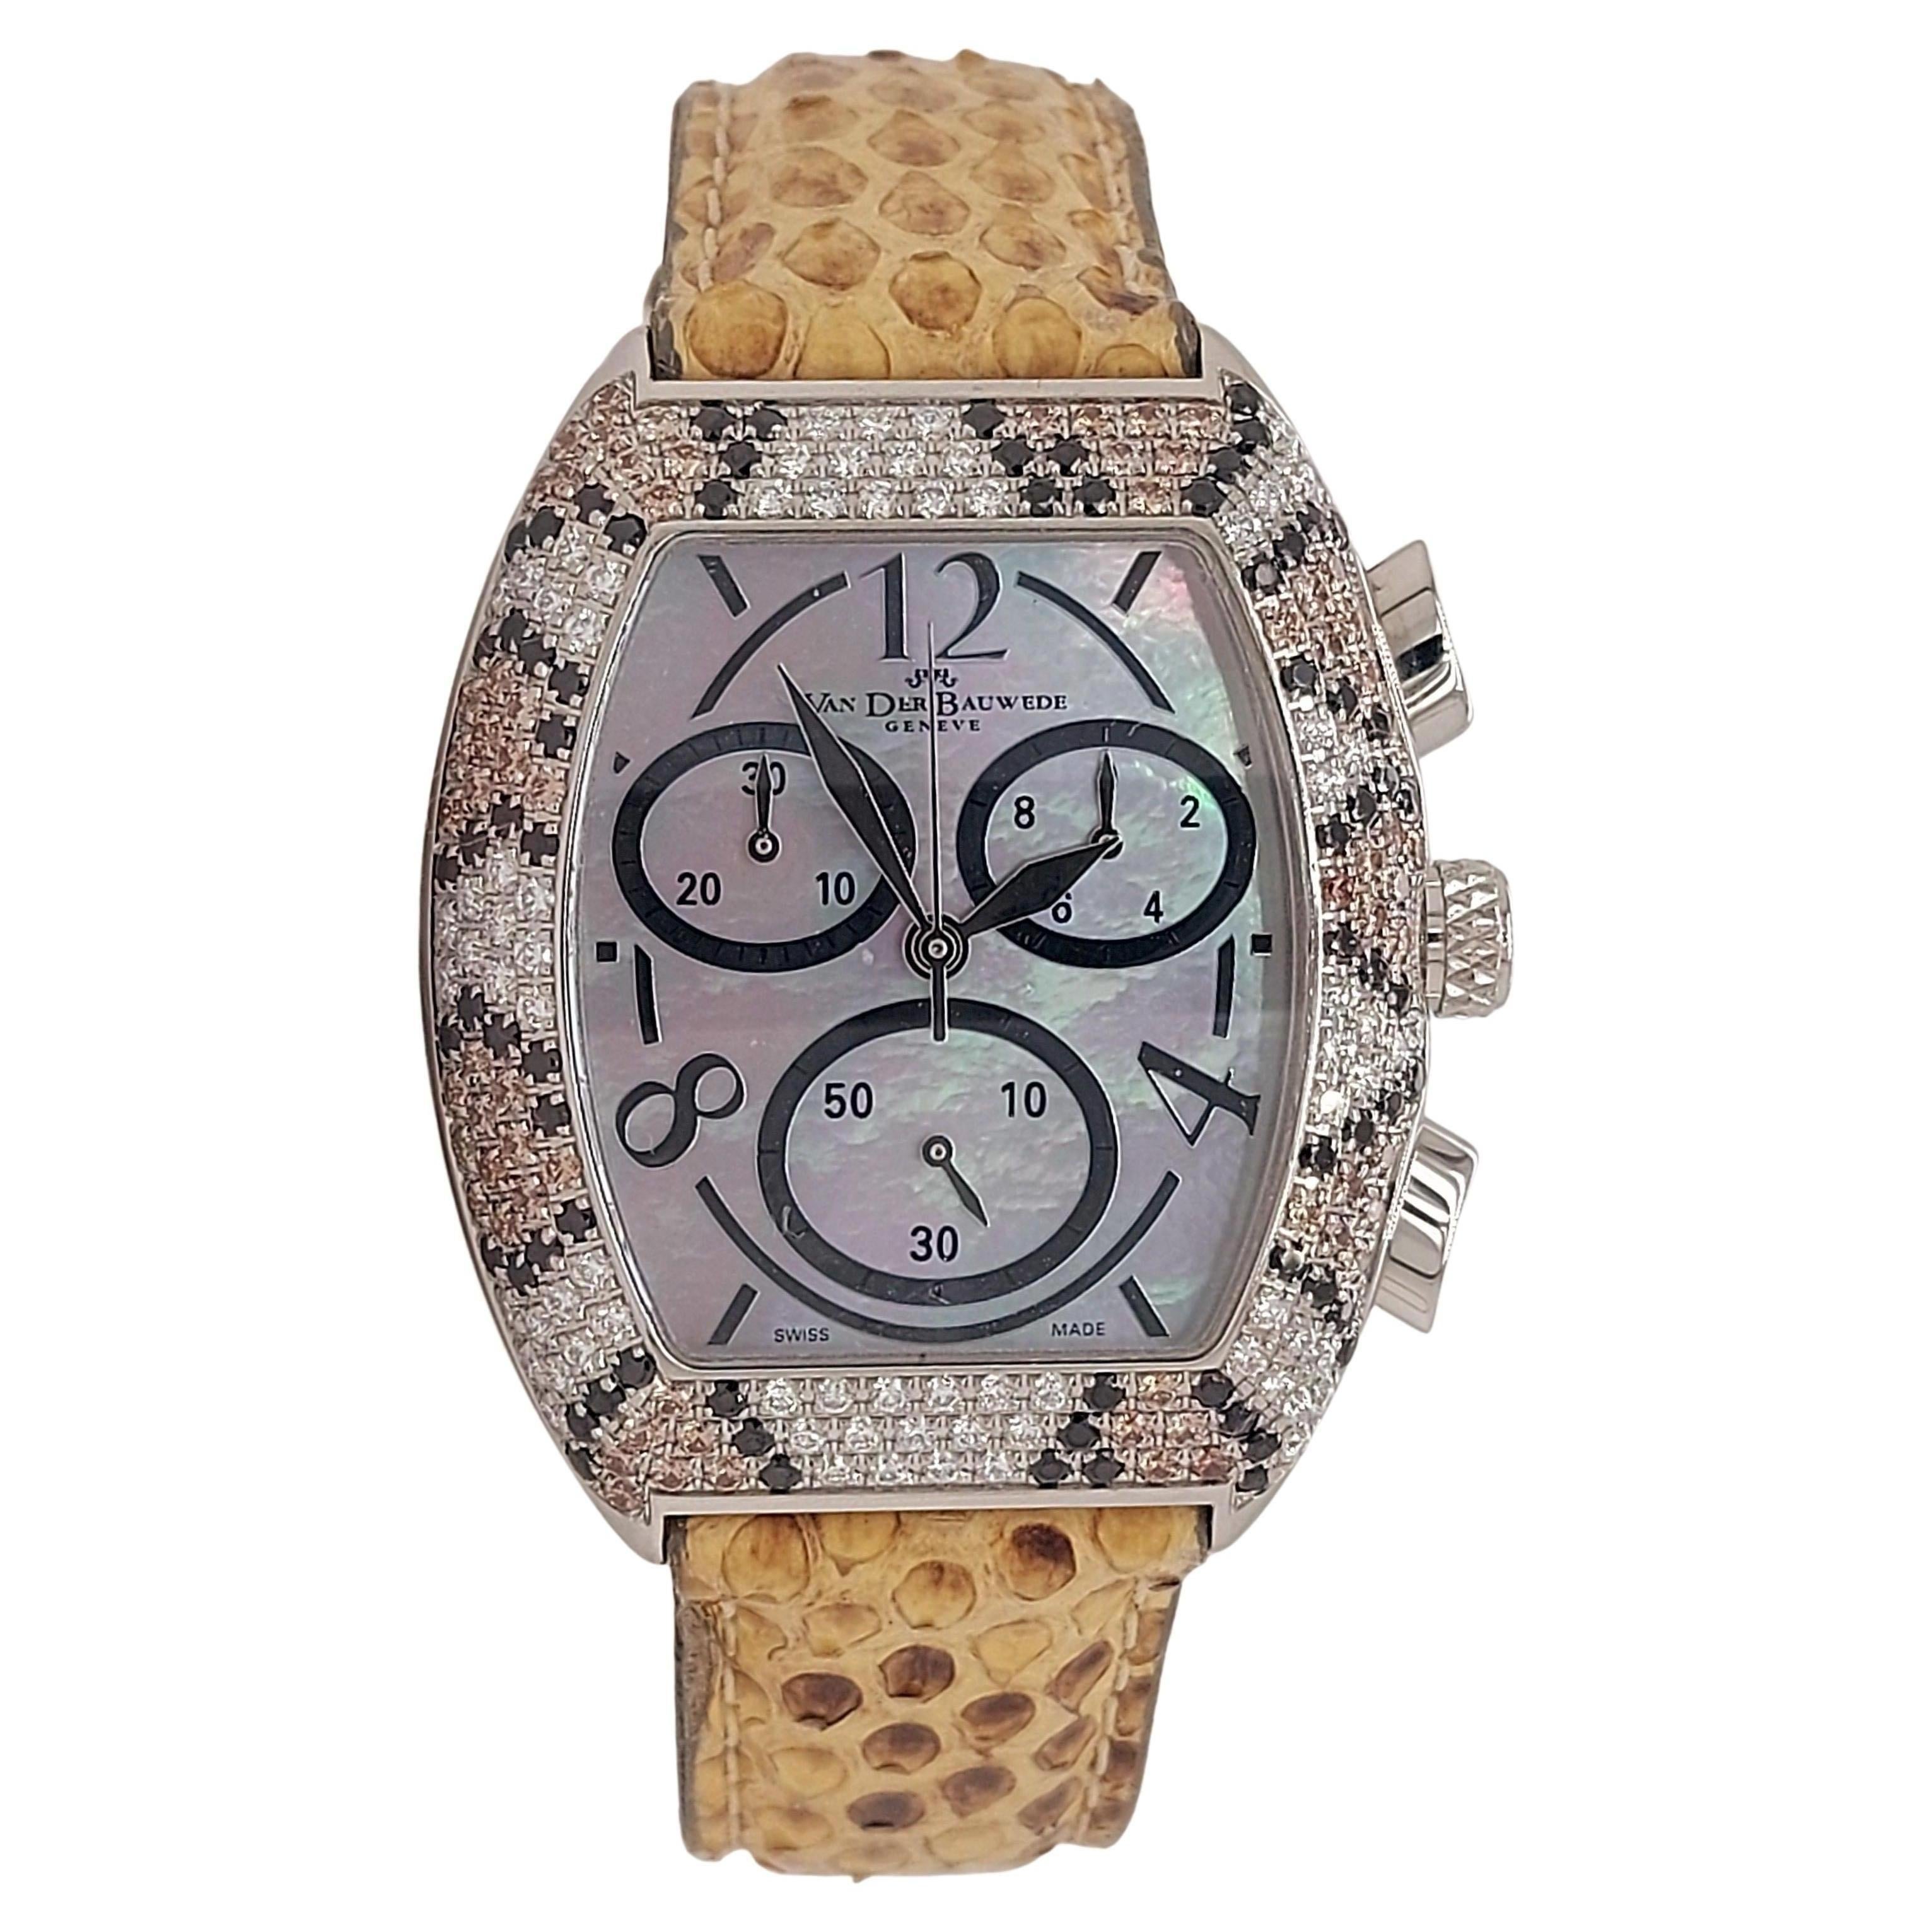 Van der Bauwede Magnum XS Chronograph Watch, Black, Cognac & White Diamonds